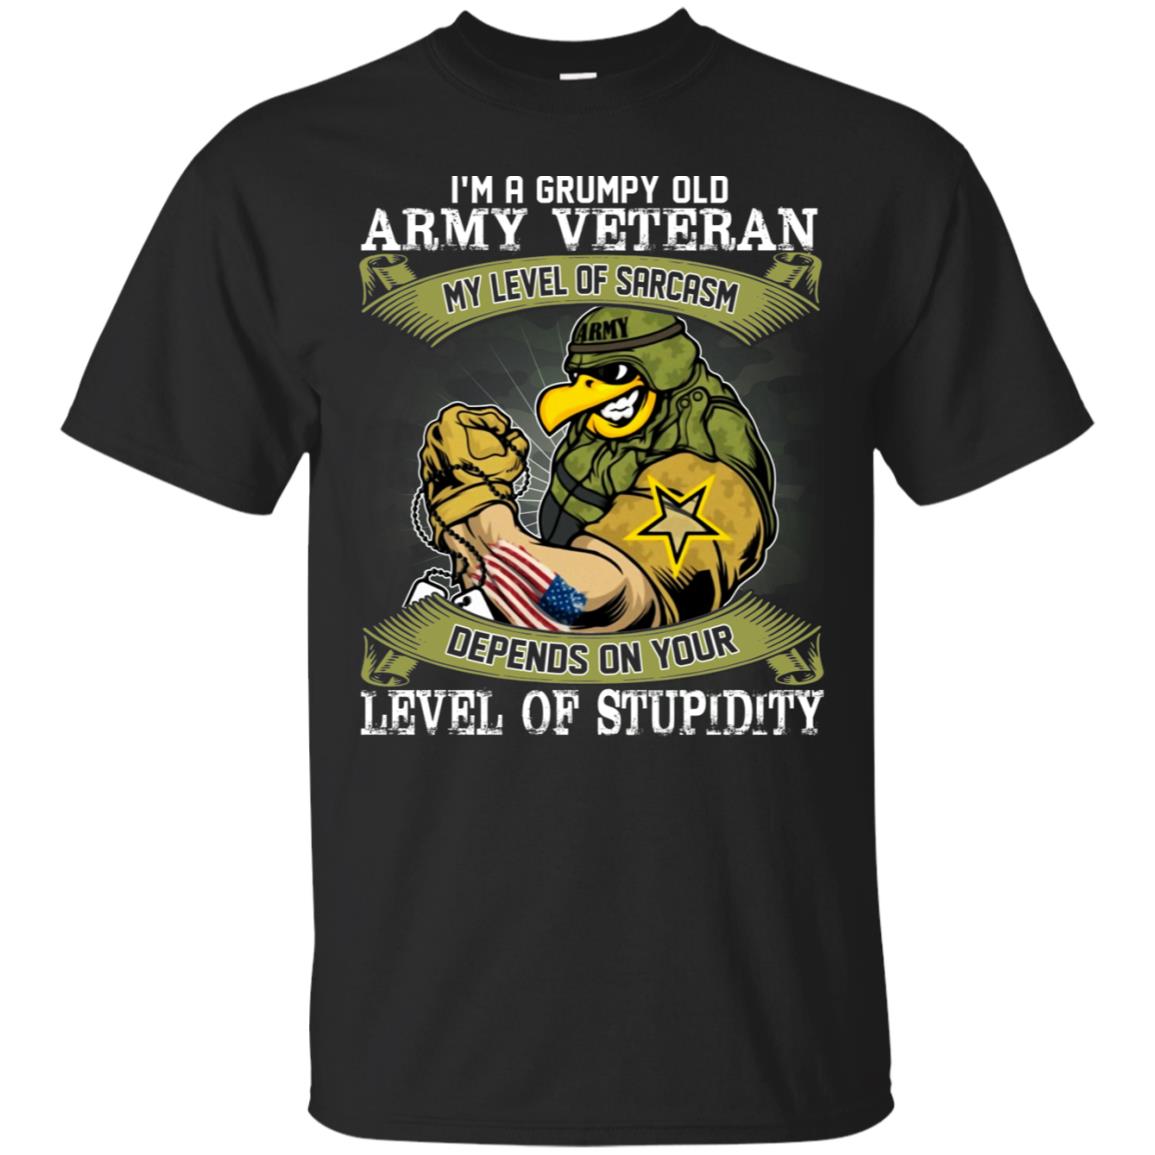 I'm a grumpy old army veteran hoodie, ls, t shirt - RobinPlaceFabrics